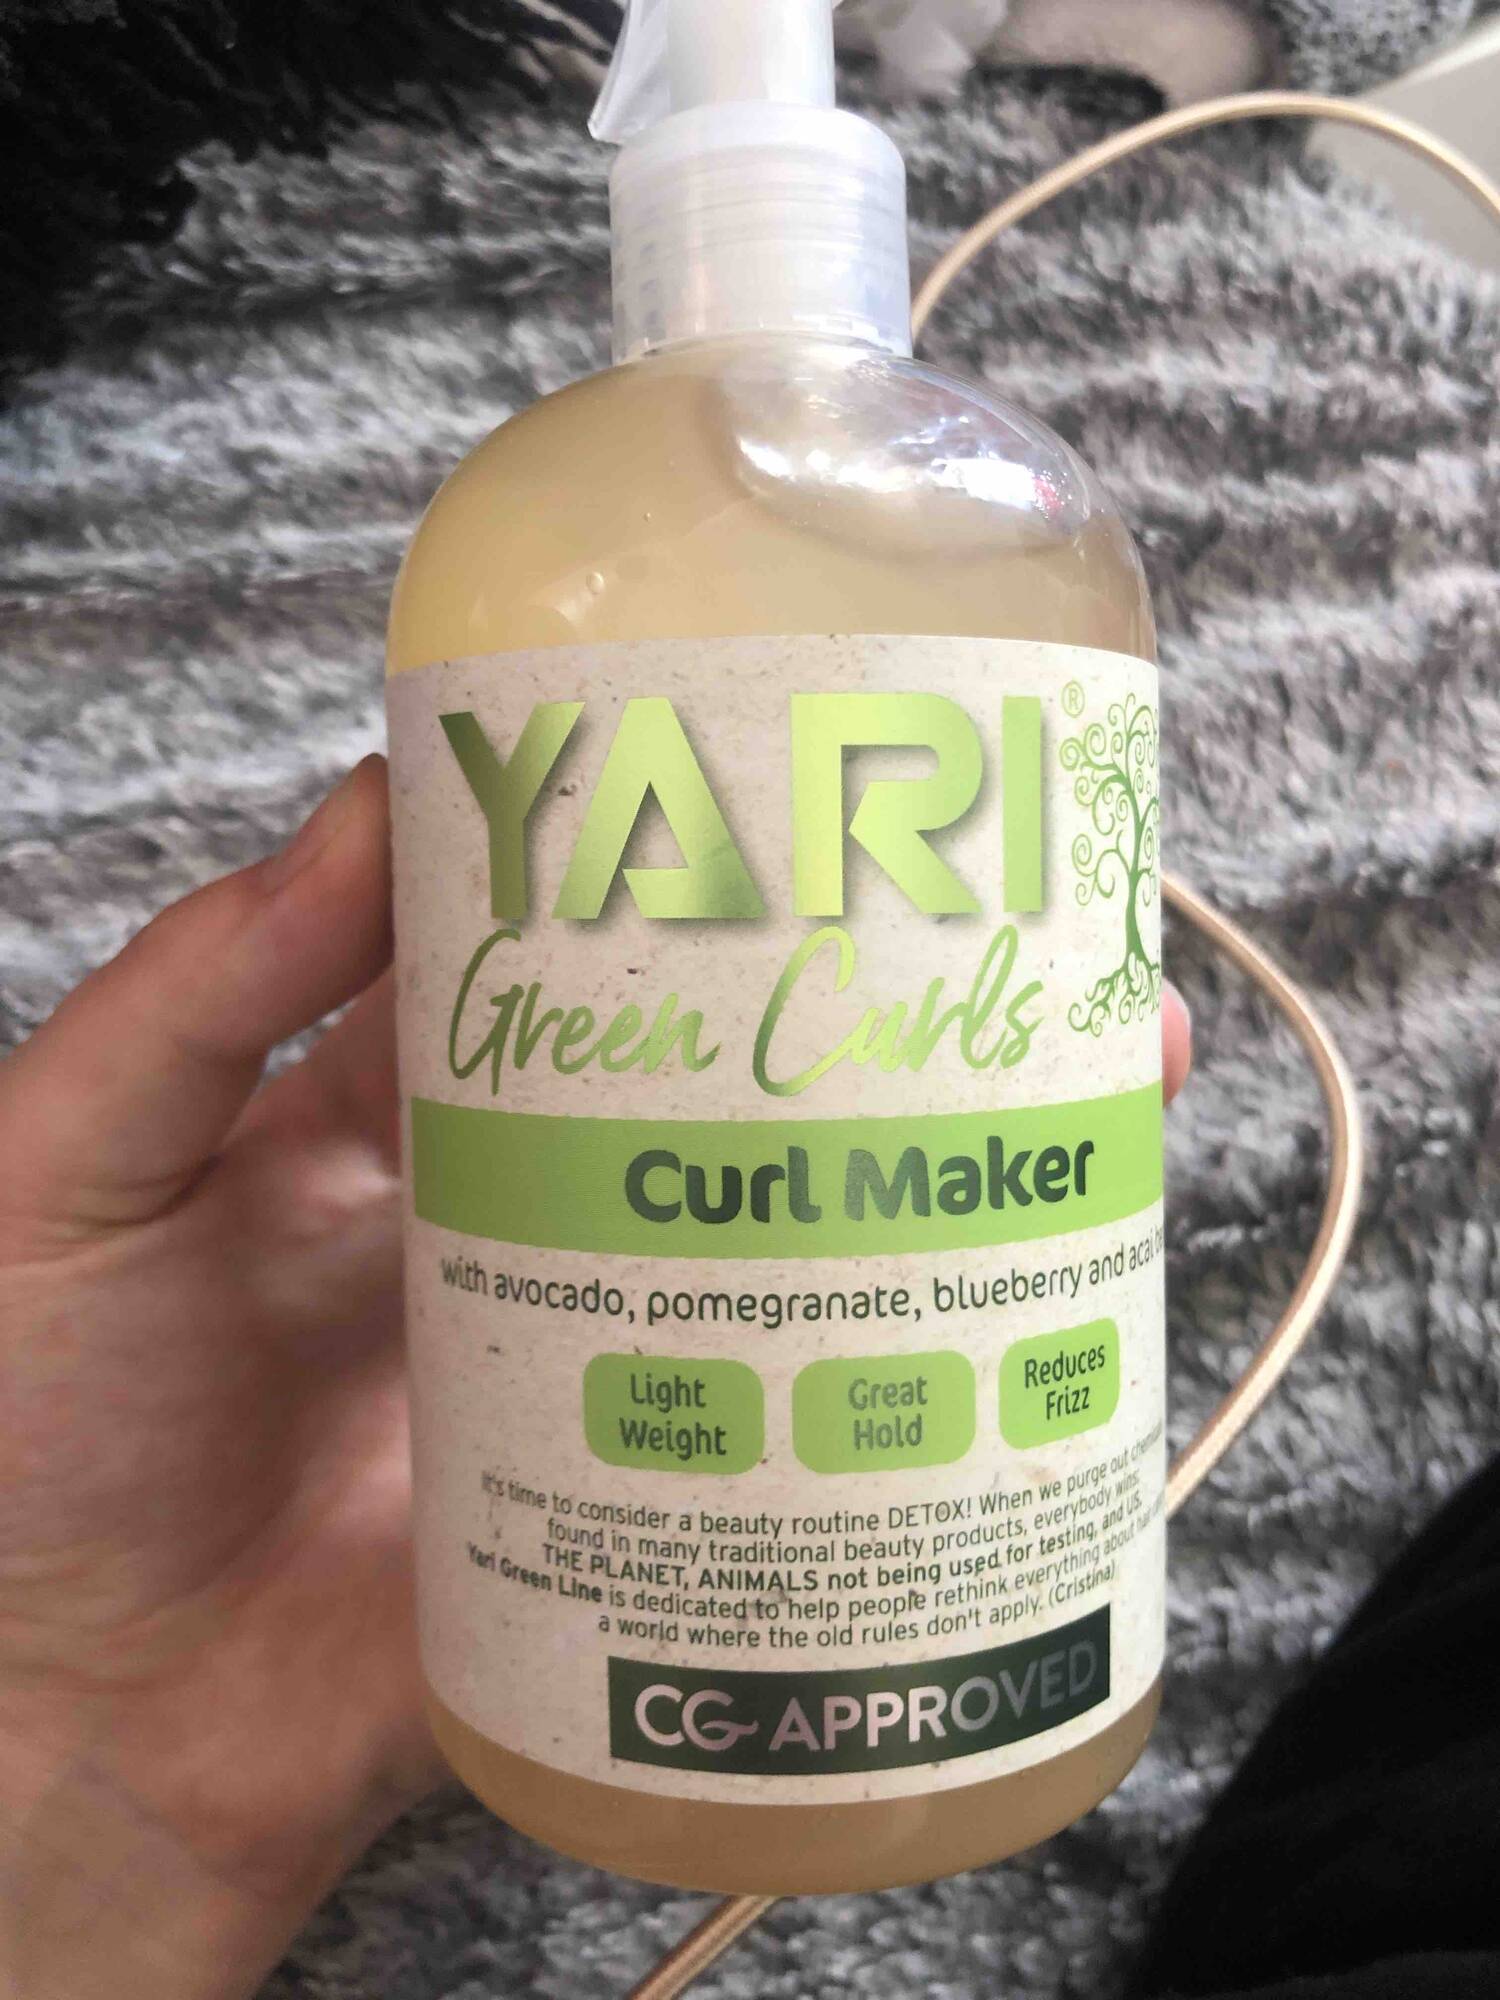 YARI - Green curls - Curl maker